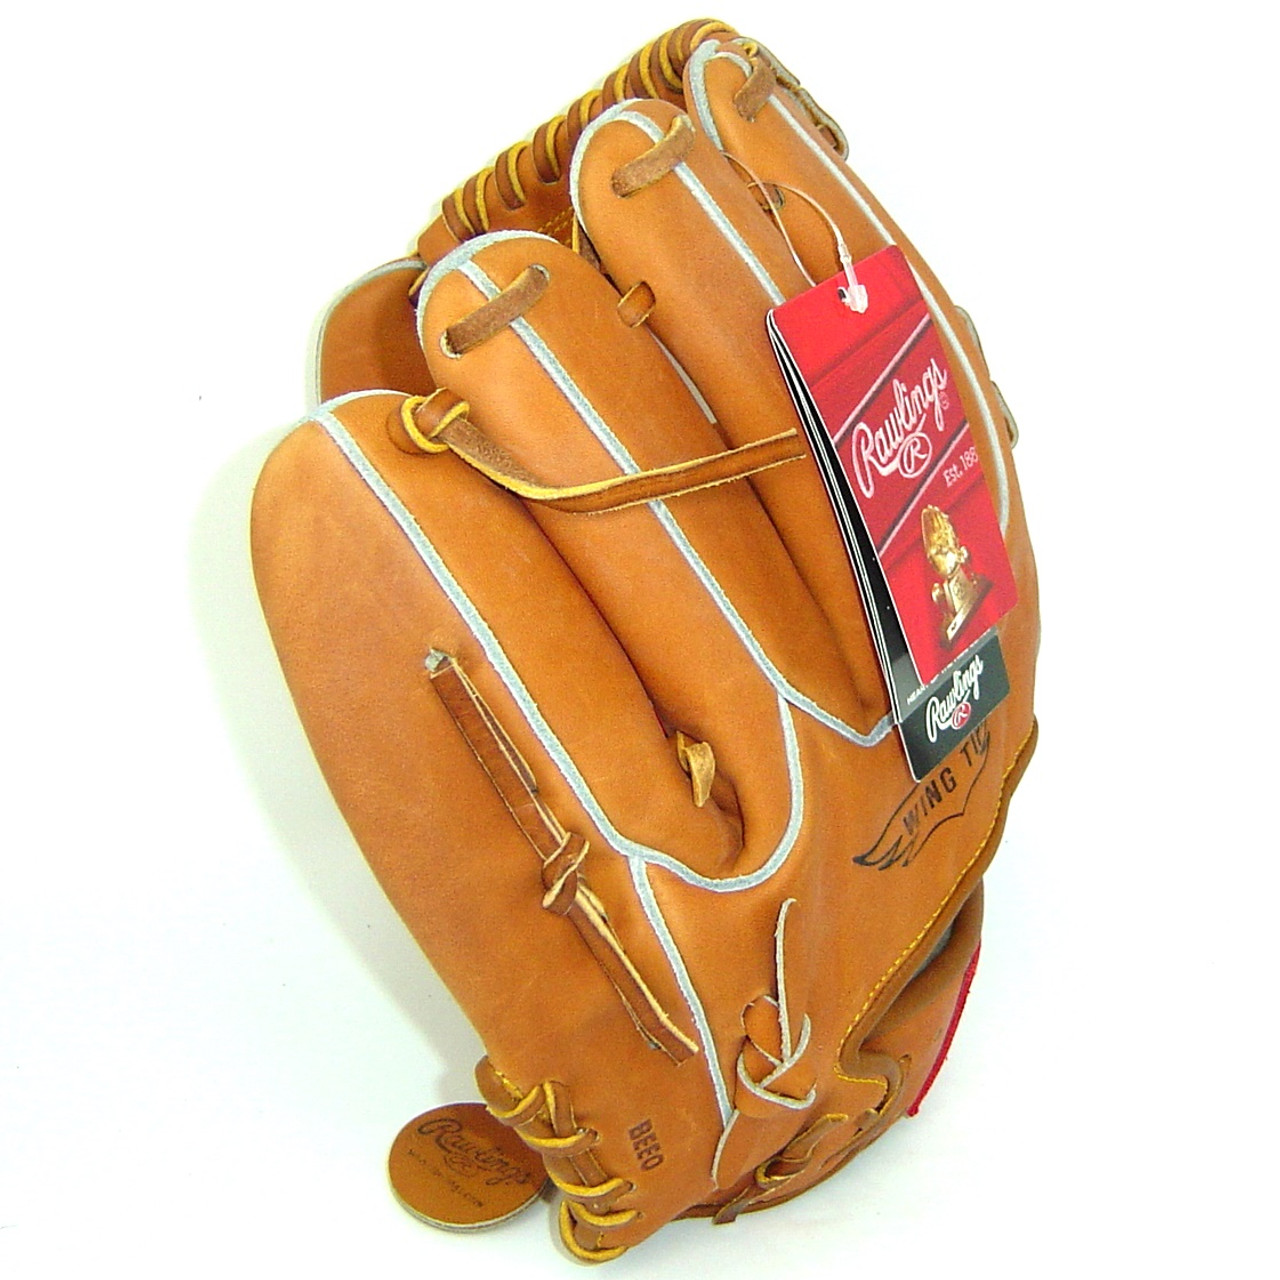 Rawlings Heart of Hide XPG3 Baseball Glove 12 inch Right Hand Throw